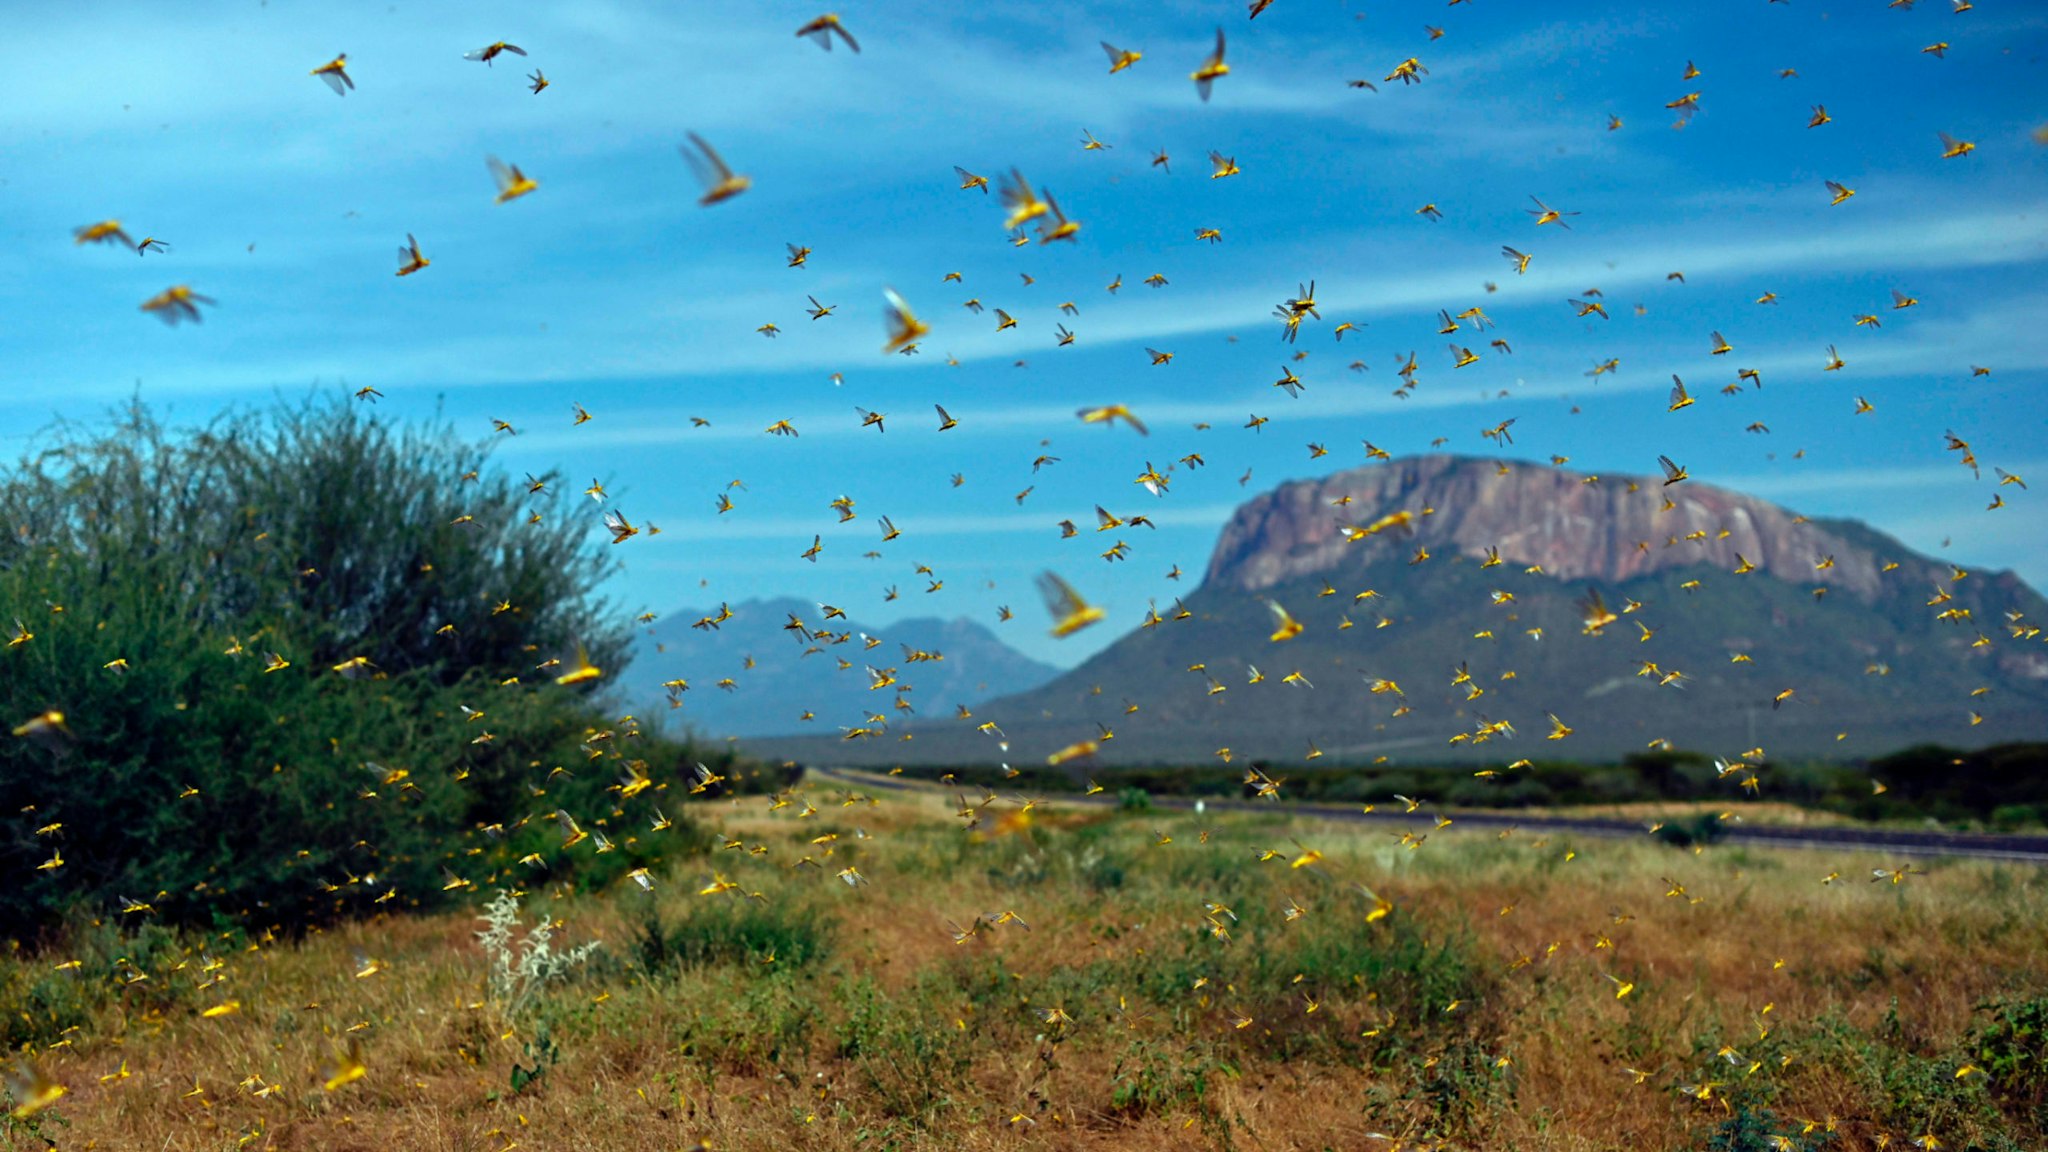 Locusts swarm from ground vegetation as people approach at Lerata village, near Archers Post in Samburu county, approximately 300 kilomters (186 miles) north of kenyan capital, Nairobi on January 22, 2020.